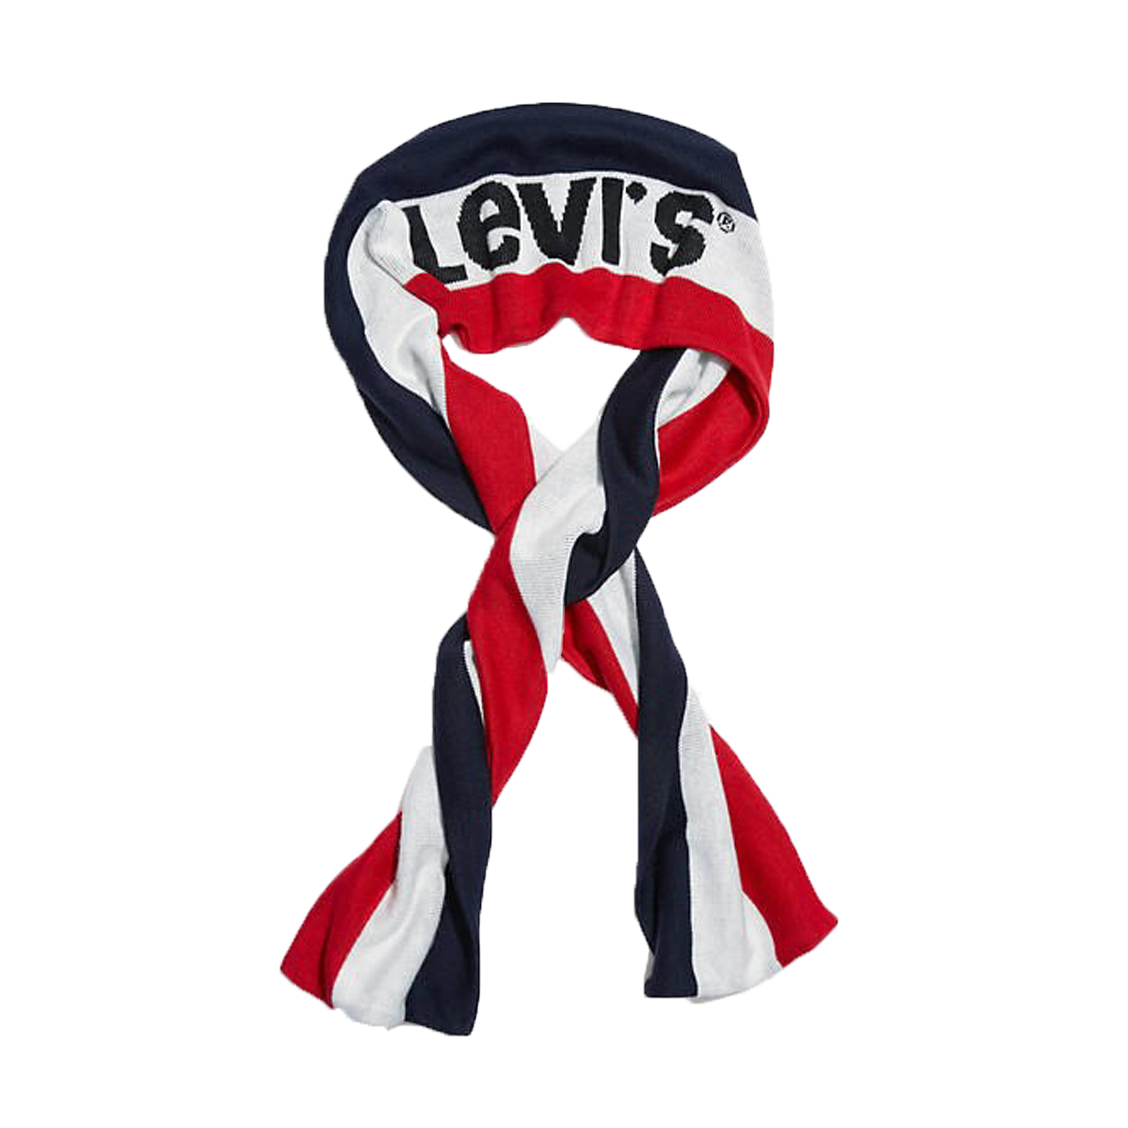 echarpe levi's sportswear logo à rayures bleu marine, blanche et rouge